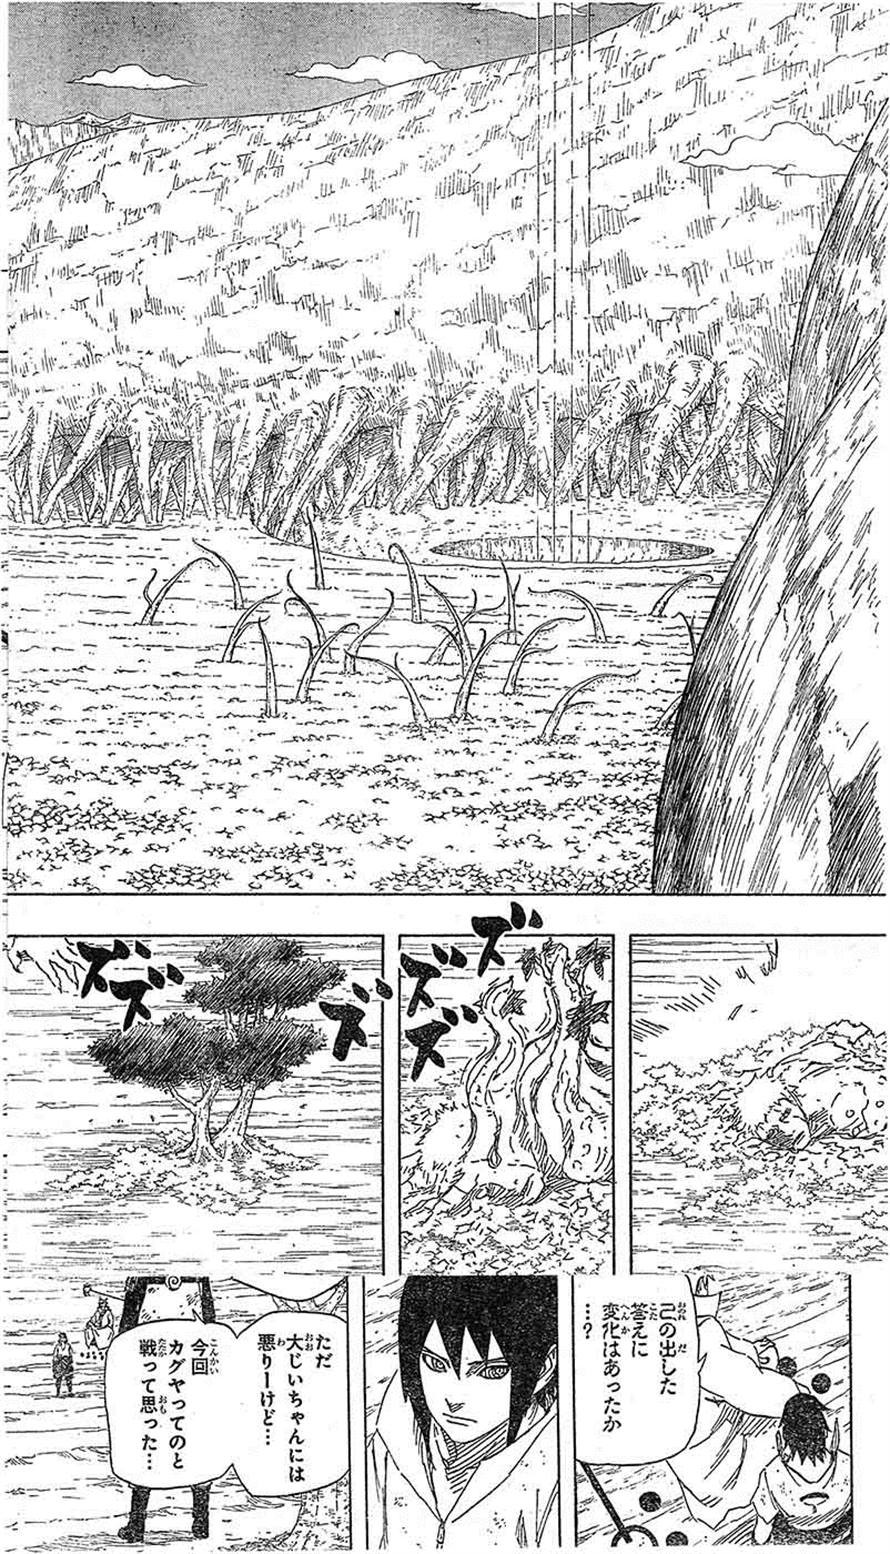 Naruto - Chapter 692 - Page 3